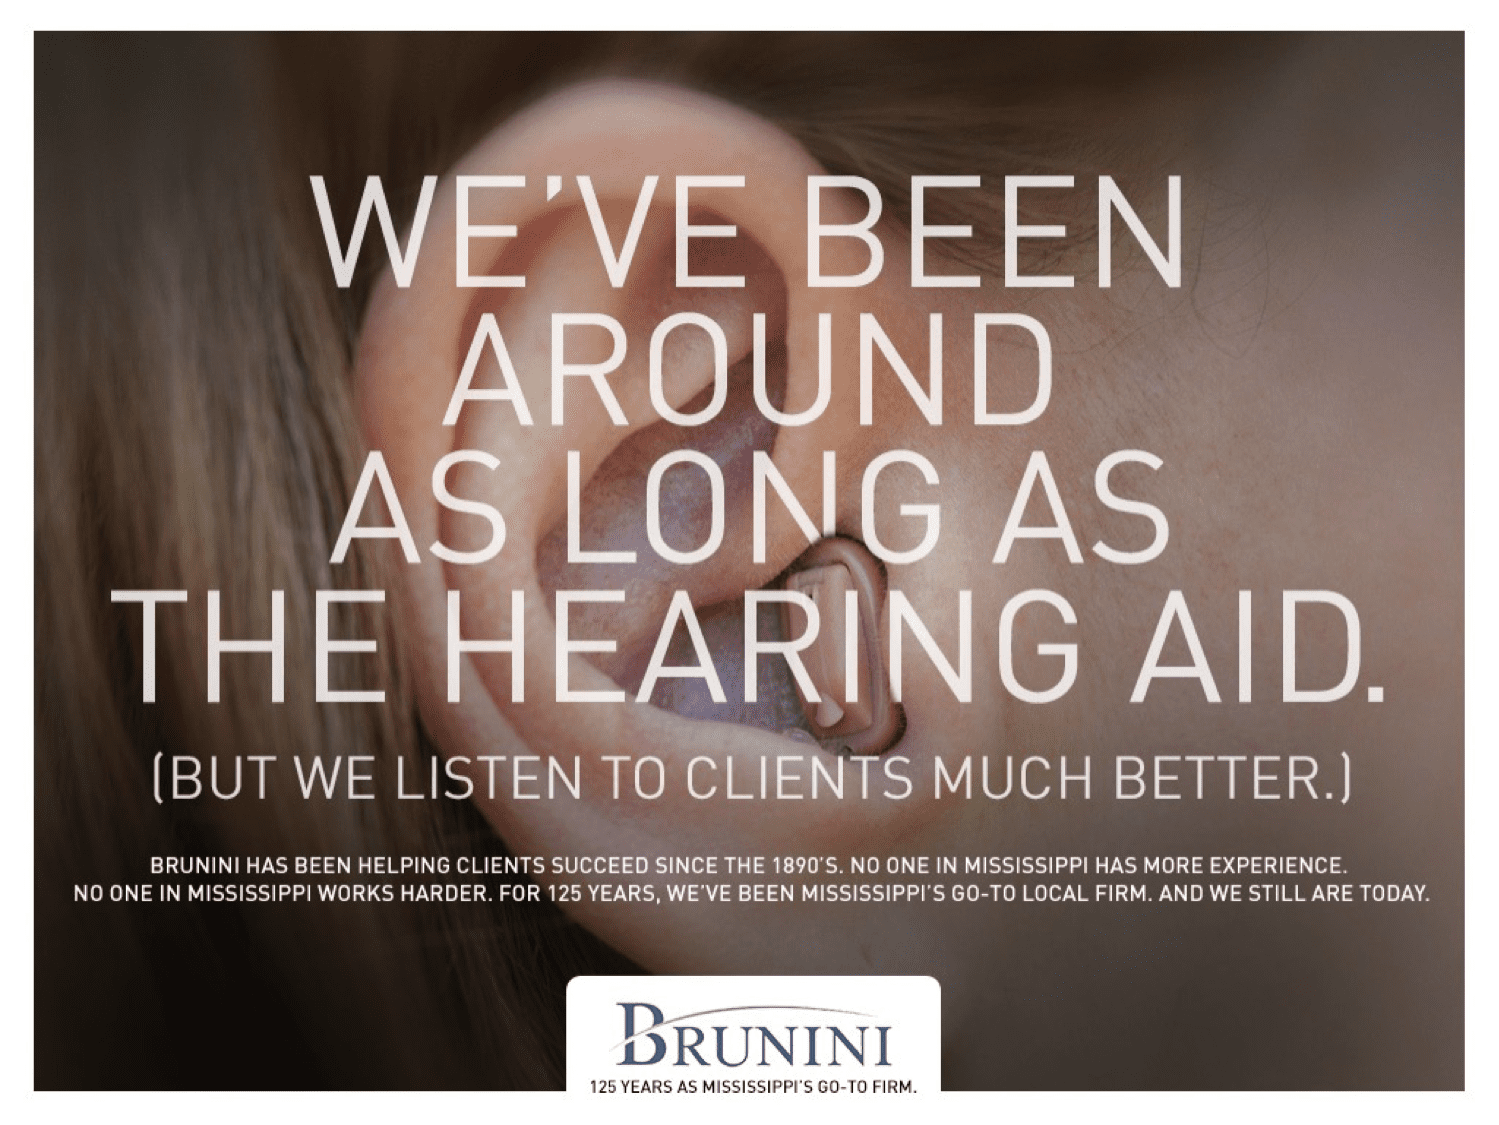 Design ad for Brunini